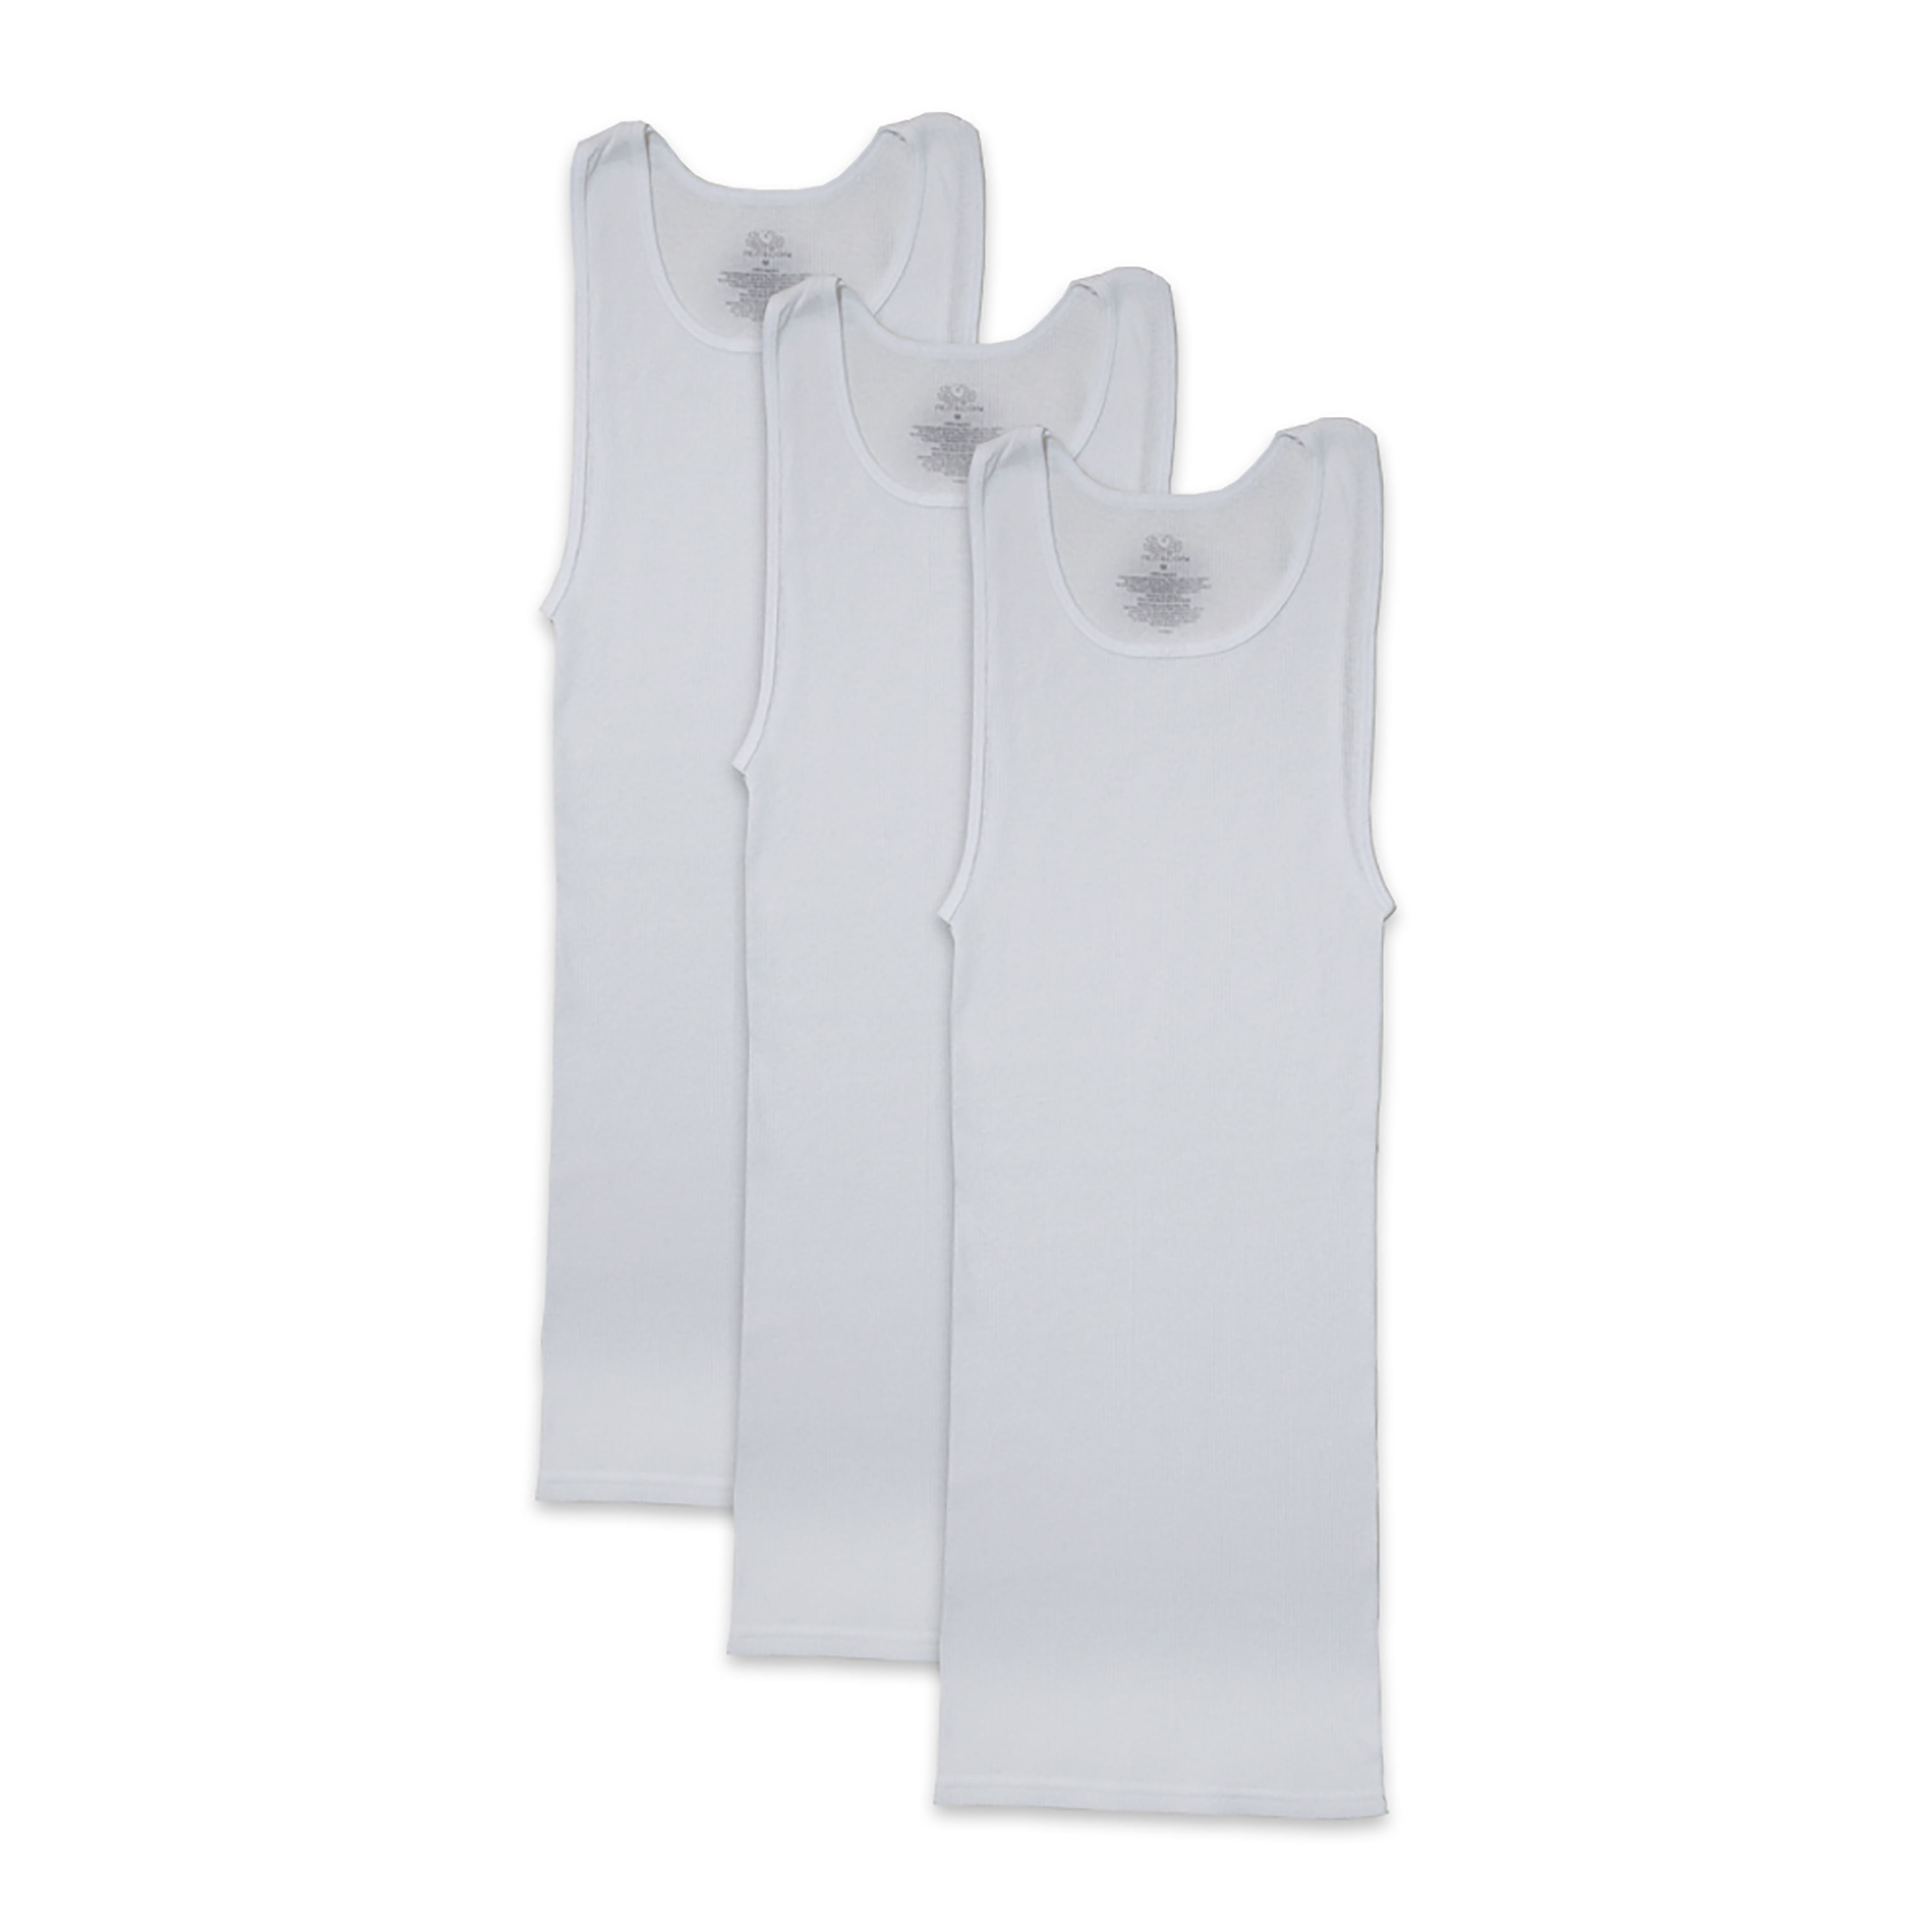  Odoland Paquete de 5 camisas de compresión sin mangas